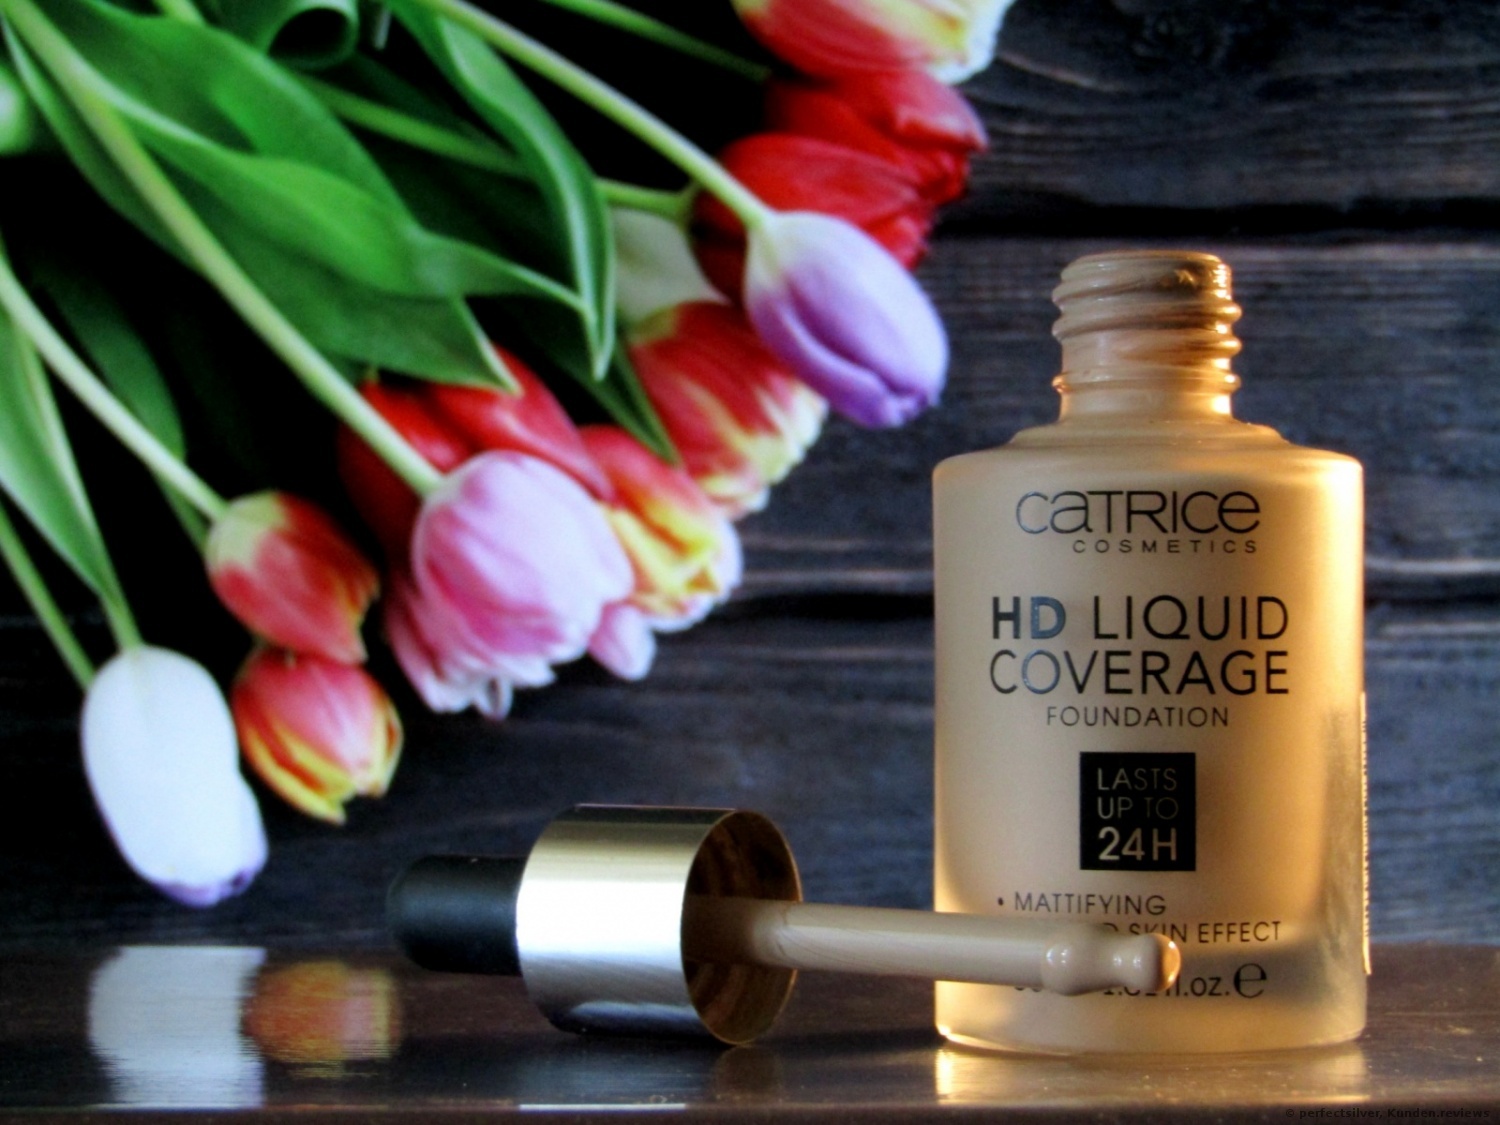  Catrice HD Liquid Coverage Foundation 